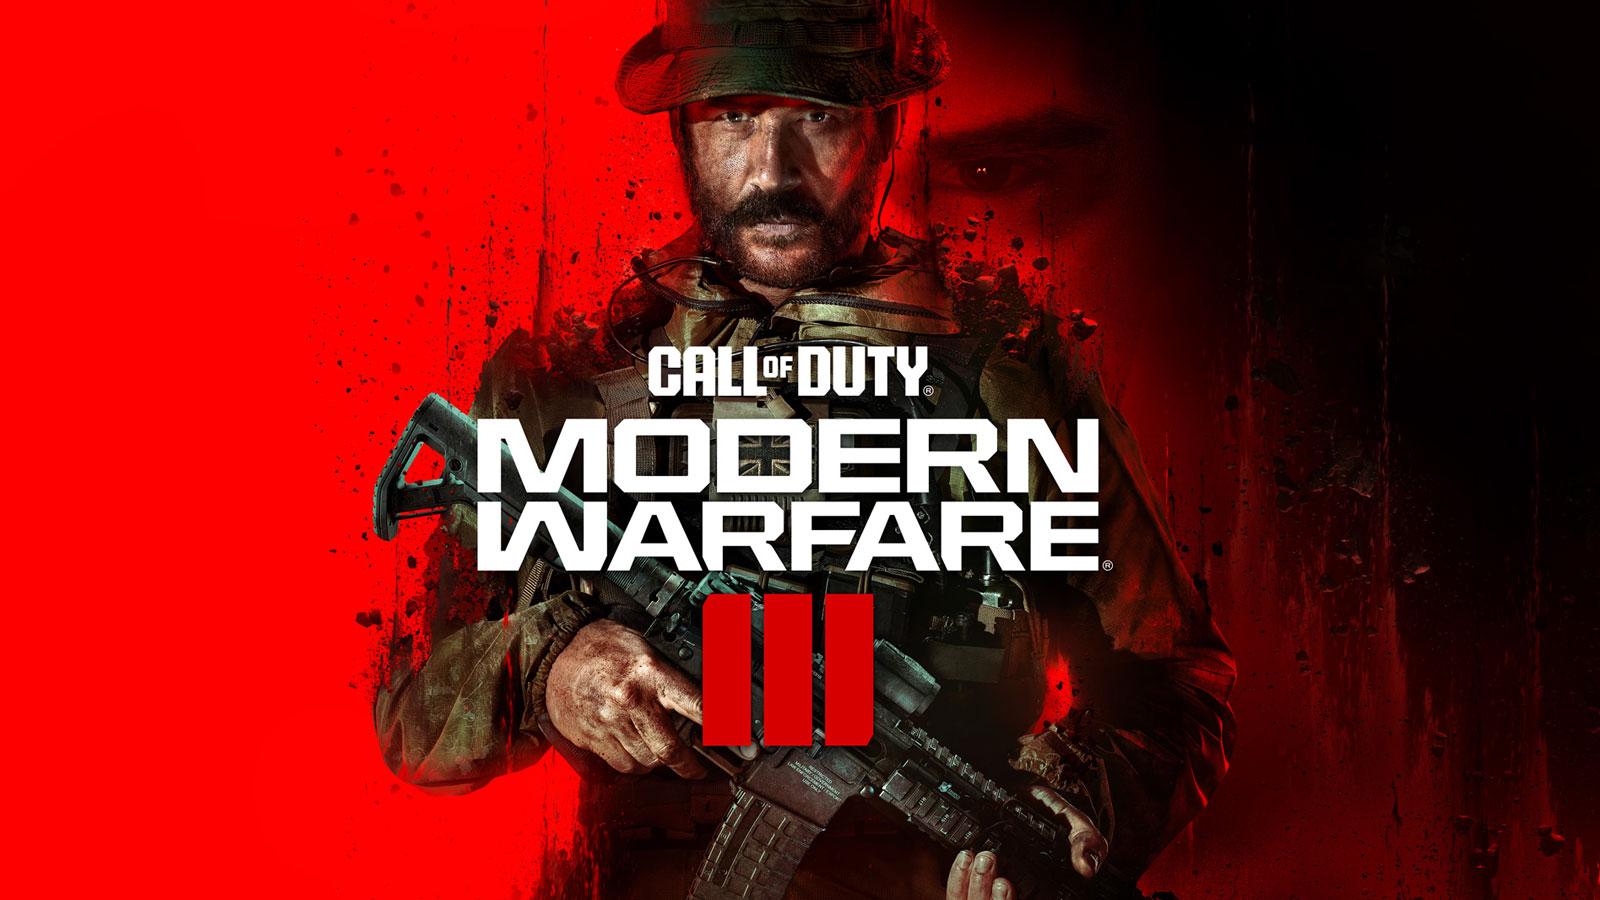 Captain Price in Modern Warfare III